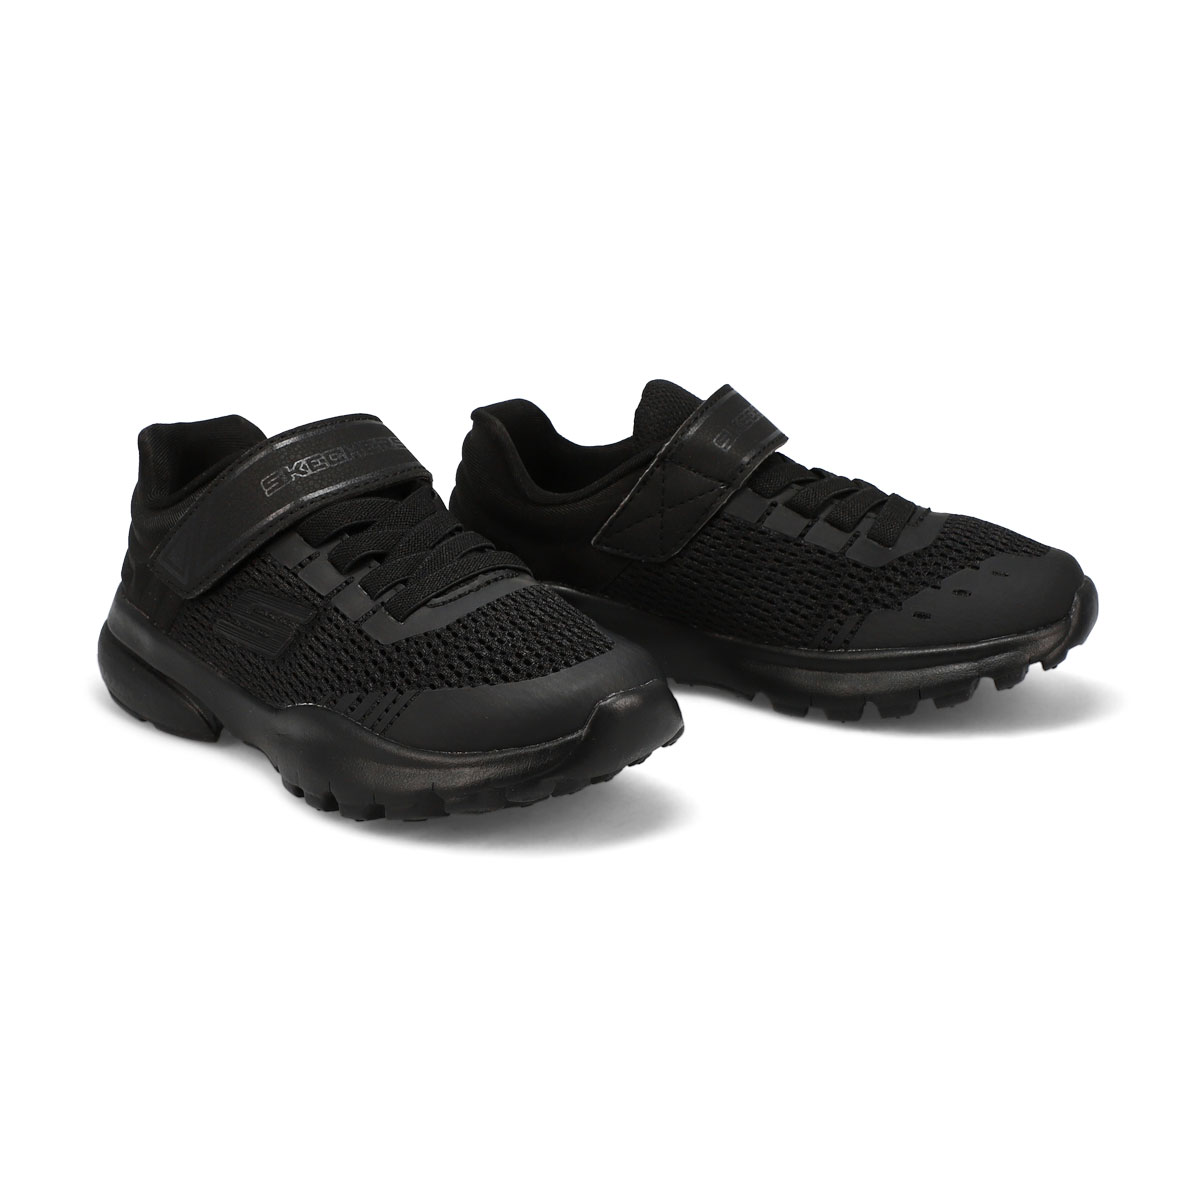 Boys' Razor Flex Sneakers - Black/Black